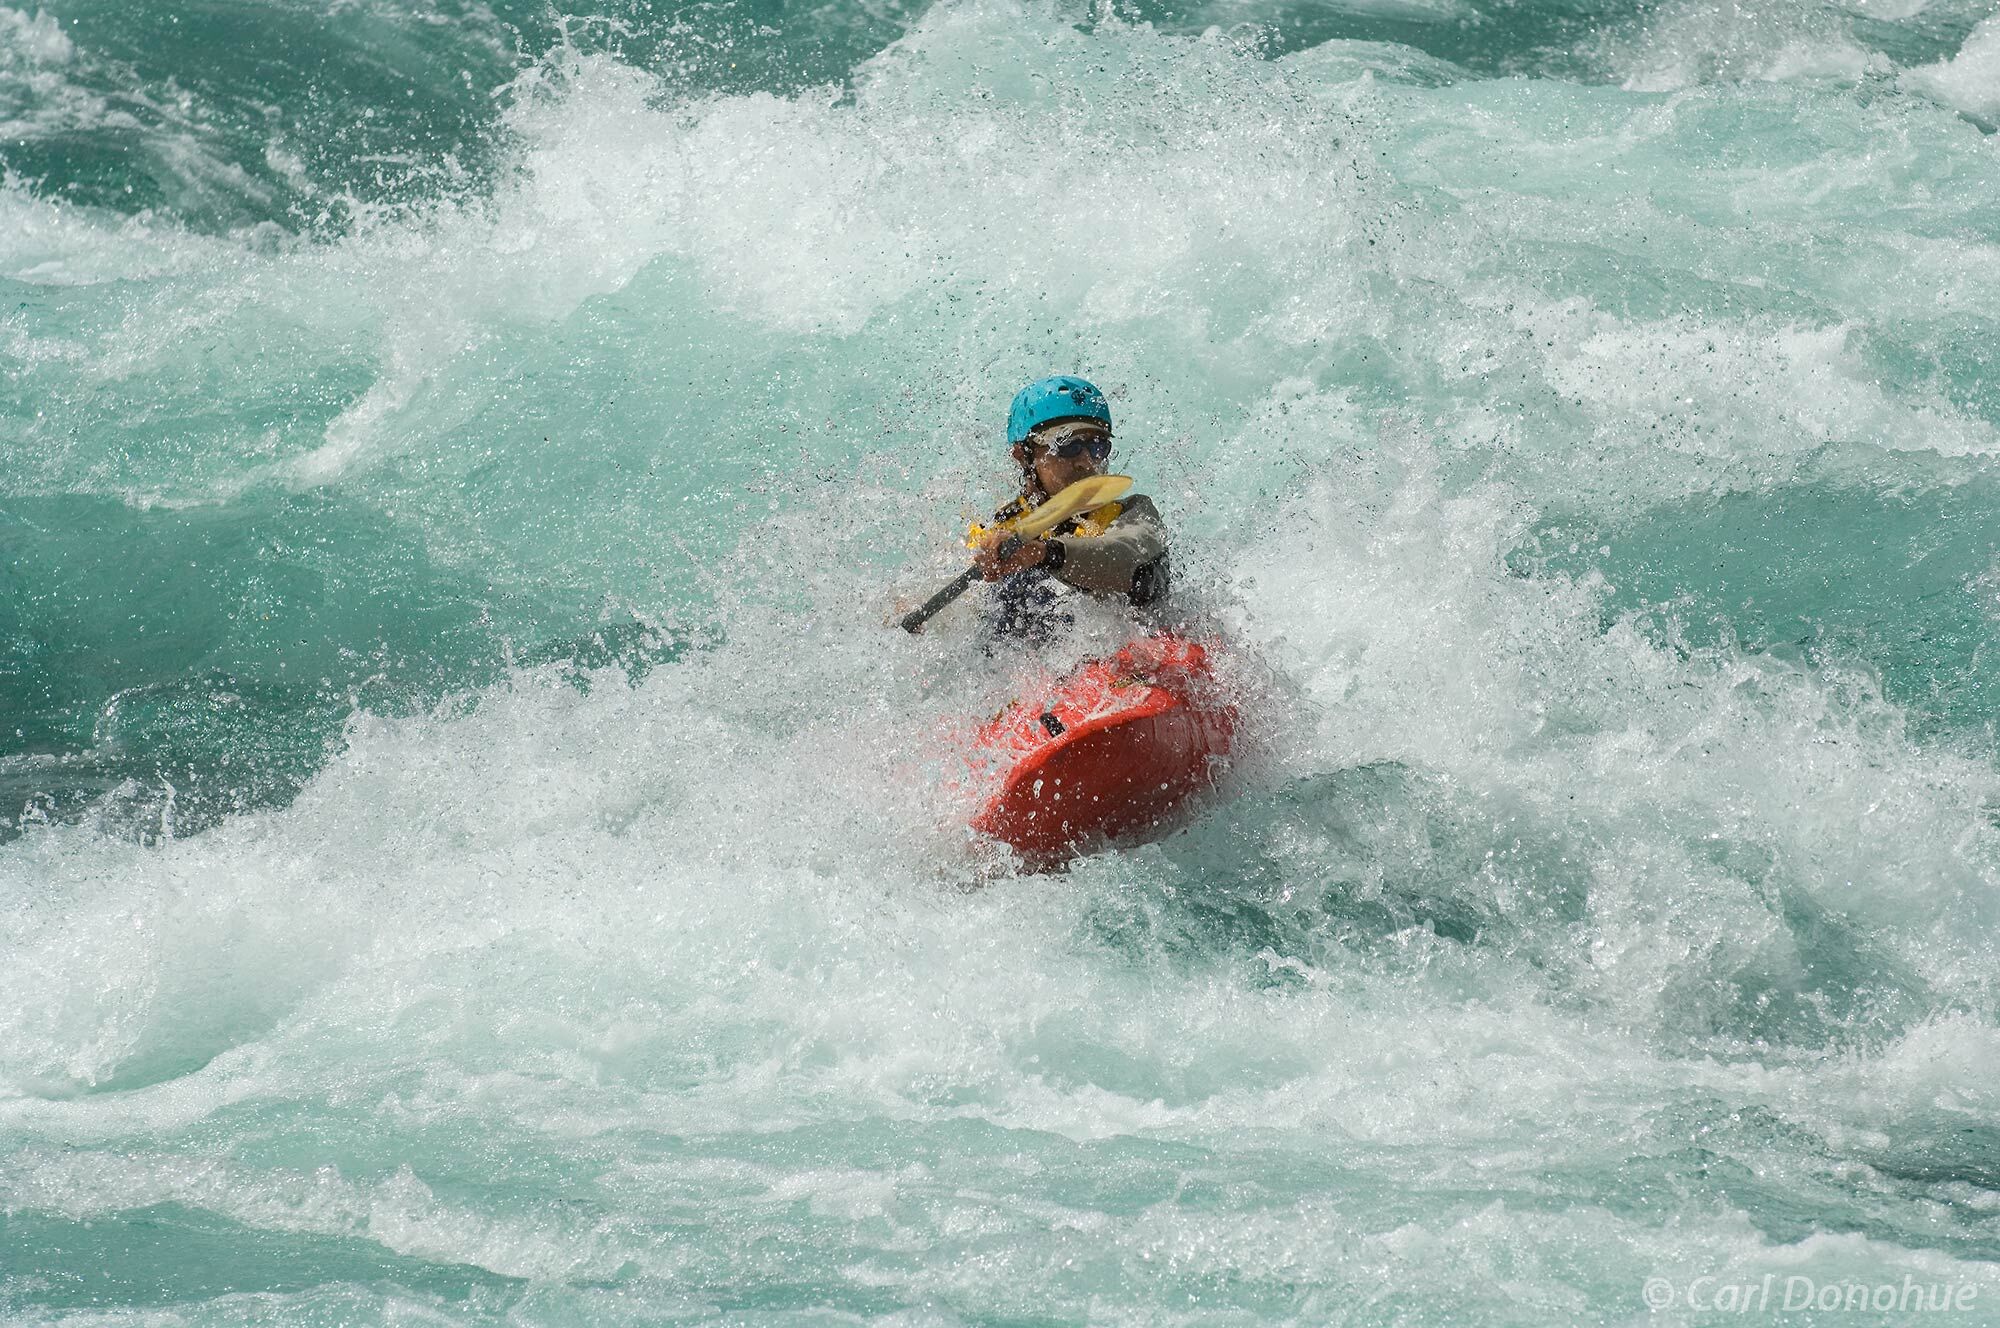 A whitewater kayaker, Josh Lowry, paddles the Class IV rapid Mondaca, on the Futaleufu River, Region X, Patagonia, Chile.